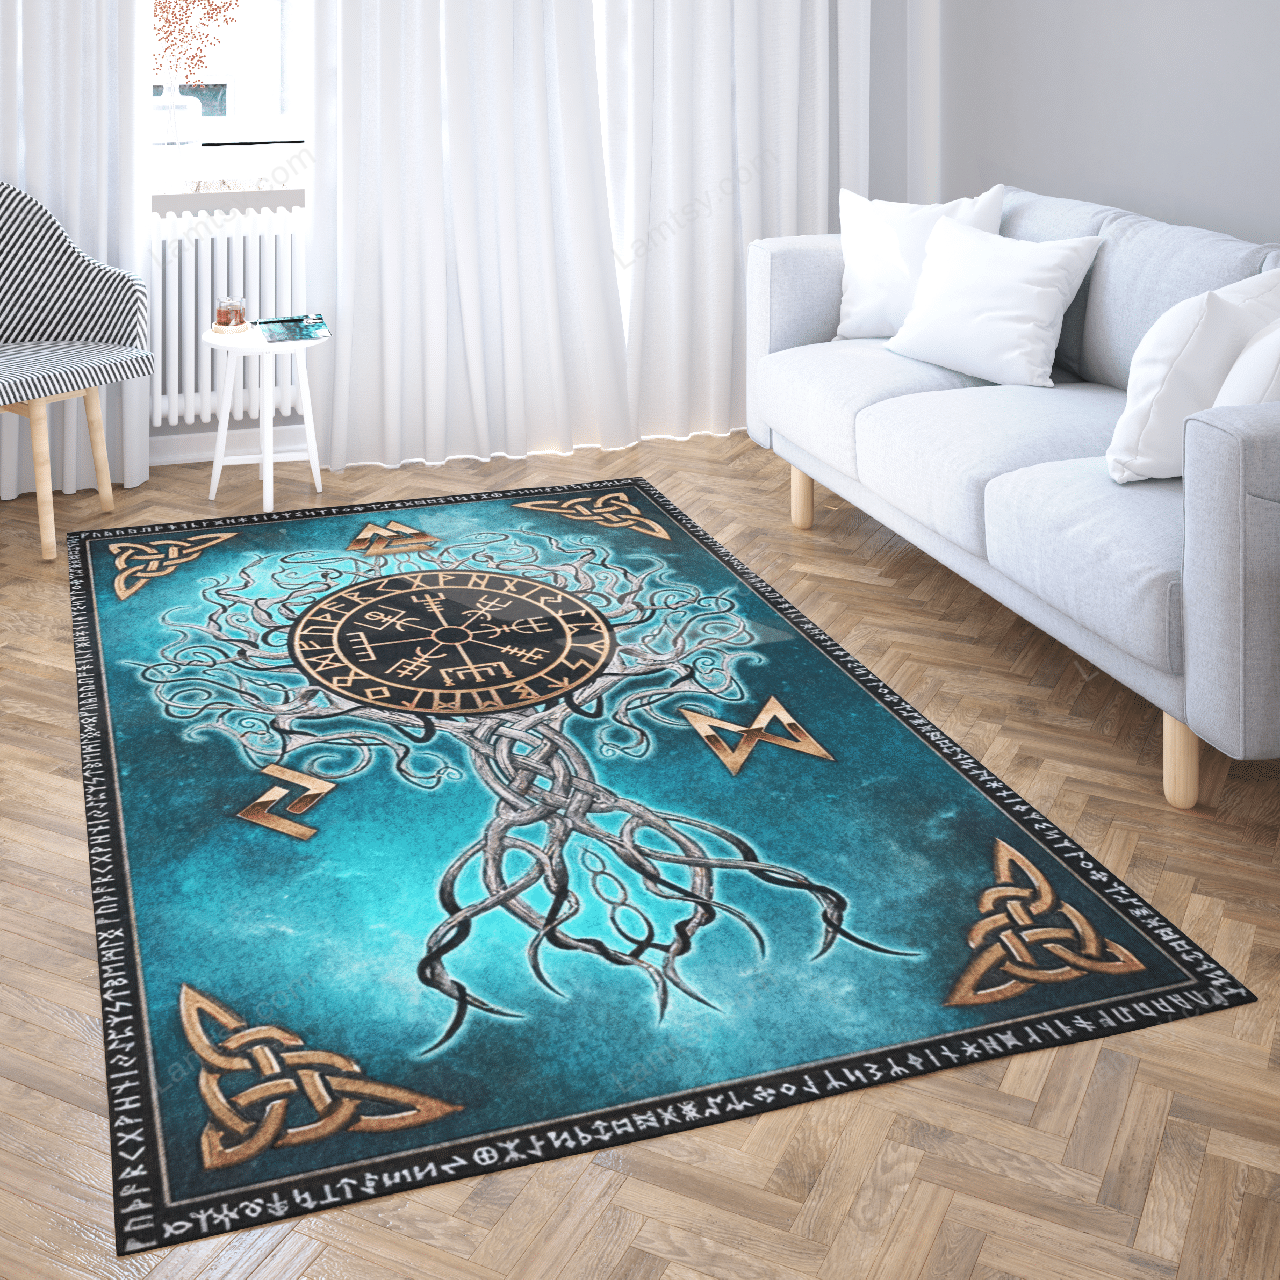 Wicca Tree of Life Viking rug 1